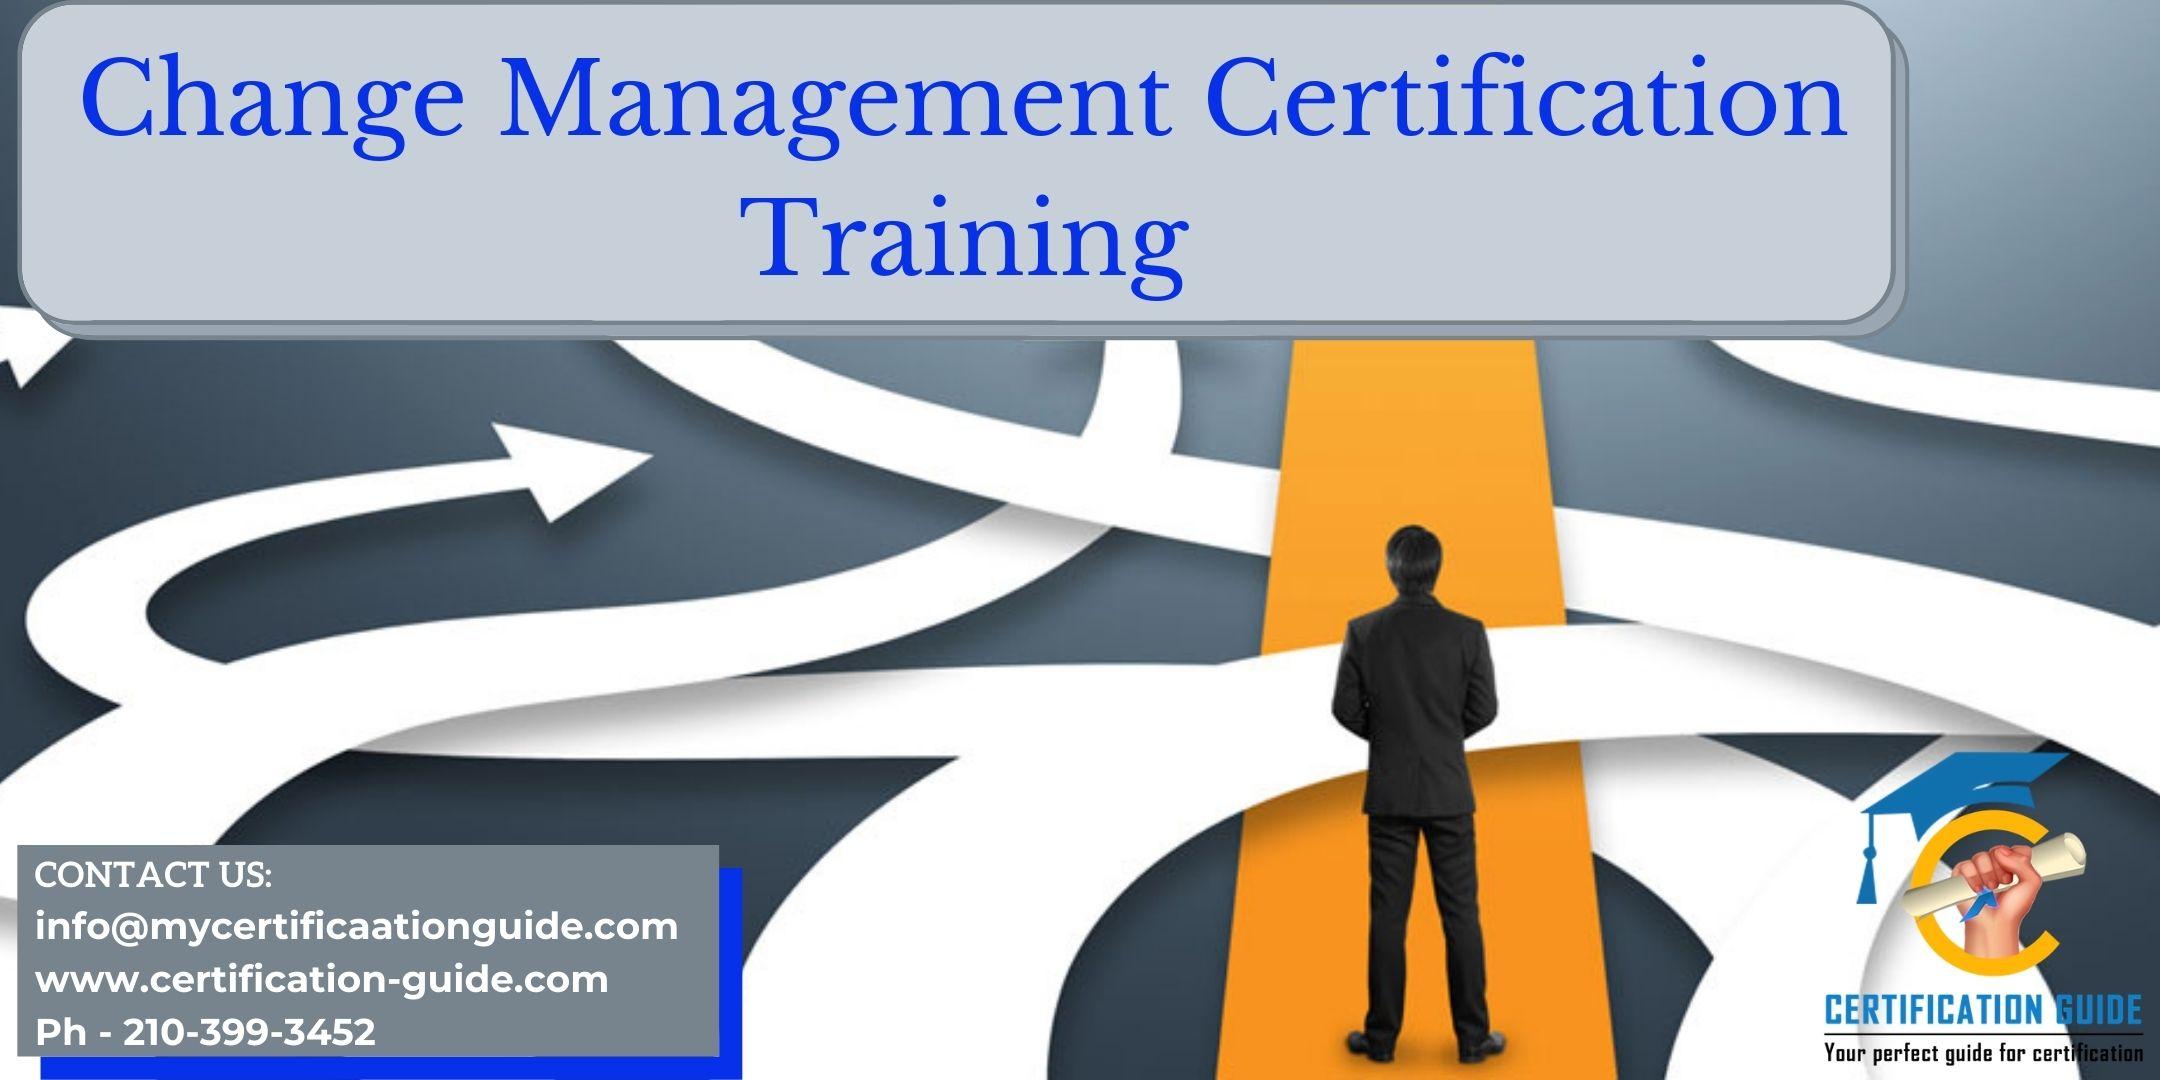 Change Management Certification Training in Tampa, FL